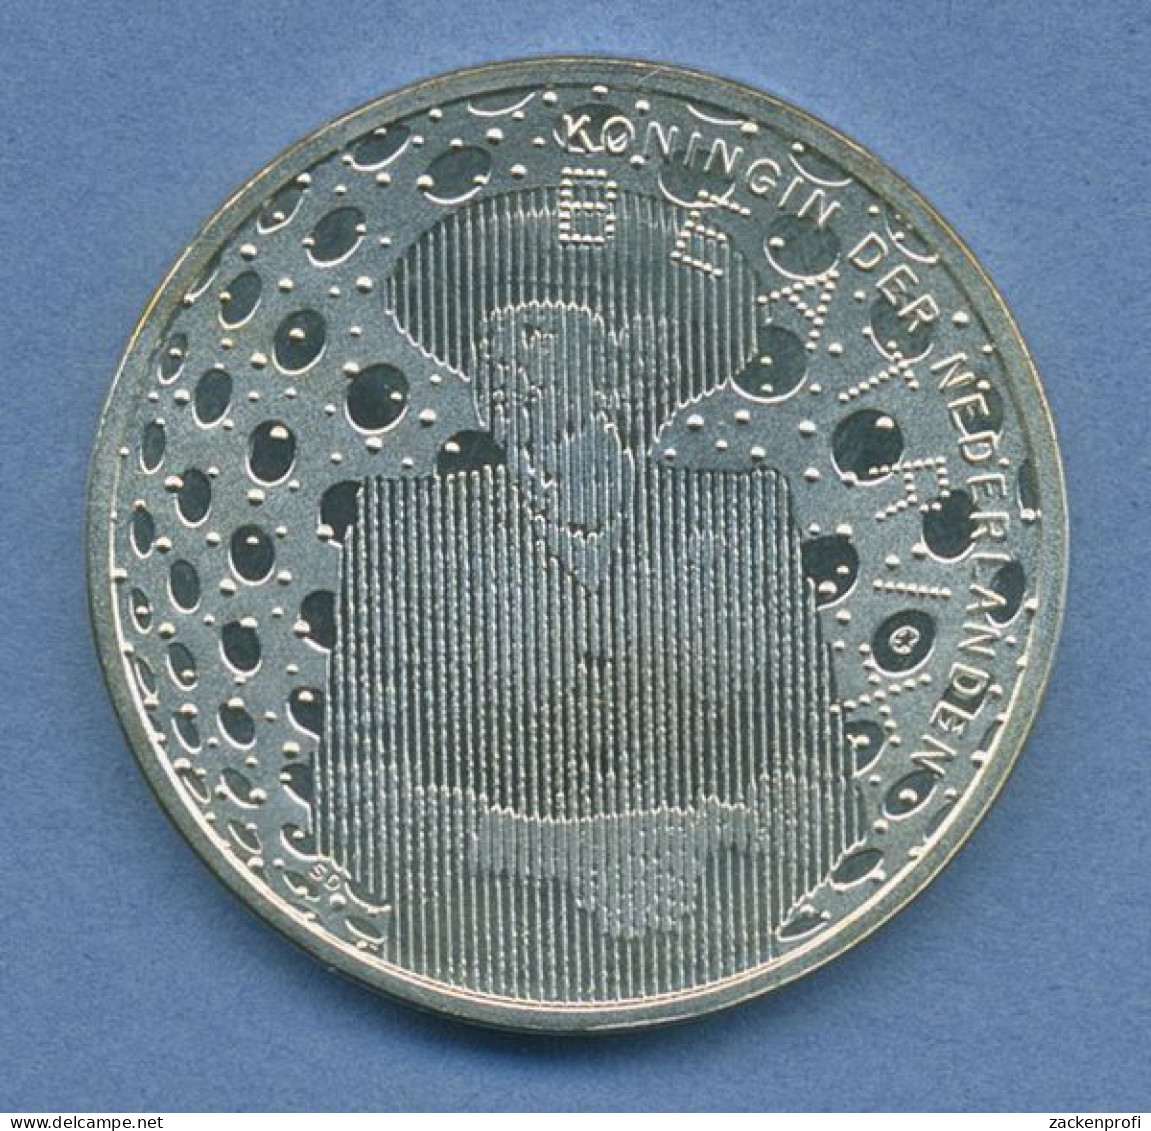 Niederlande 5 Euro 2005 Tag Der Befreiung, Silber, KM 254 PP (m4361) - Nederland